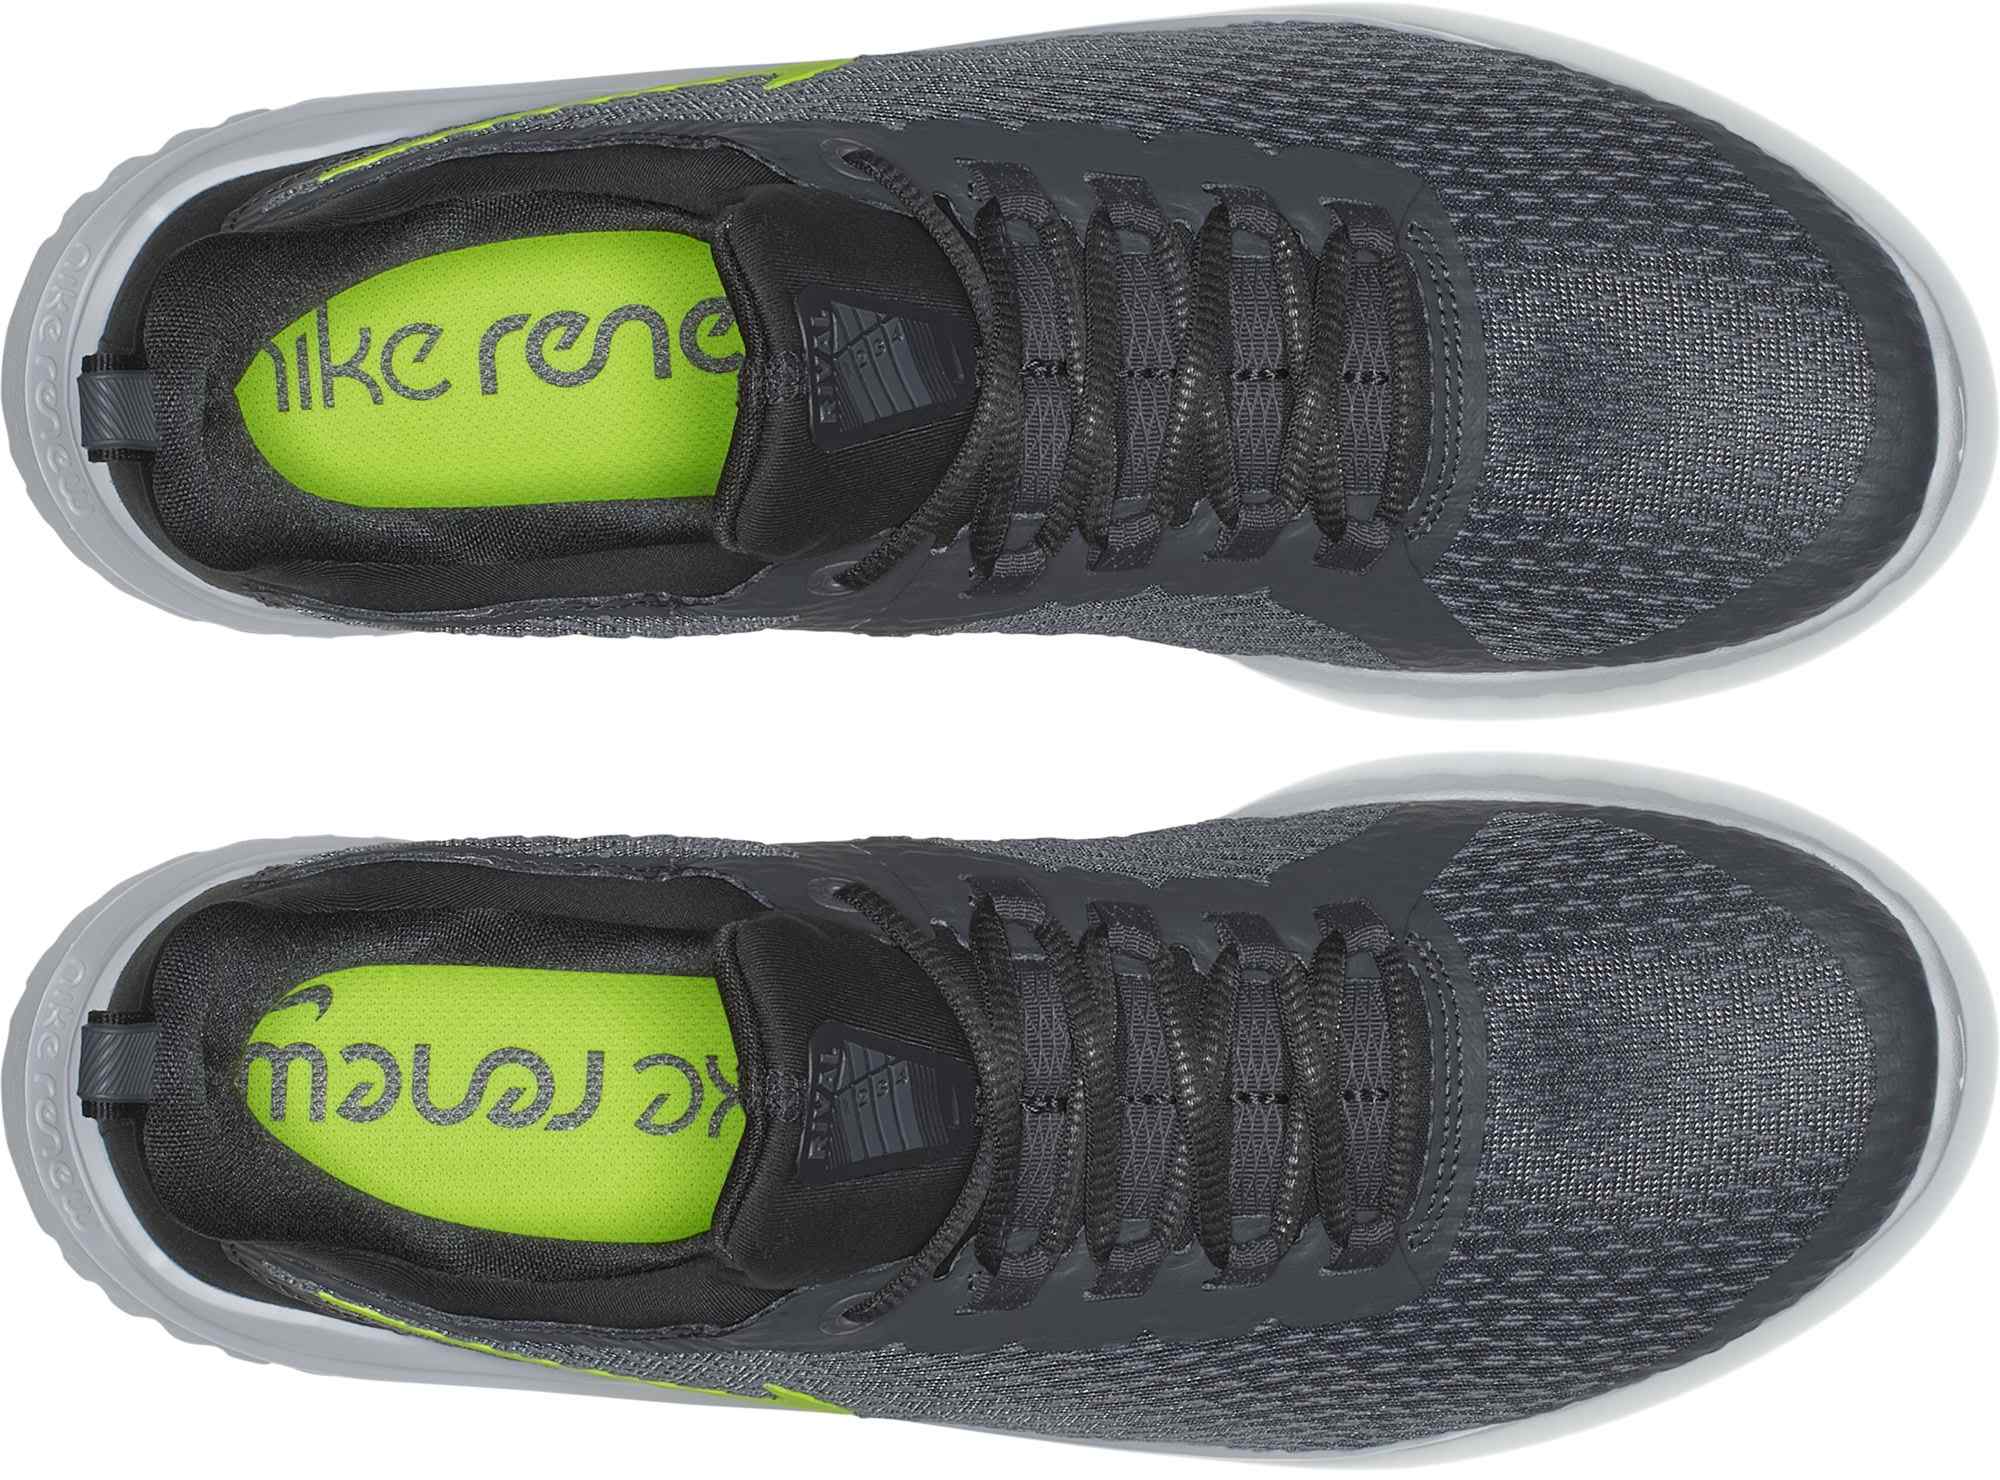 Men’s running shoes